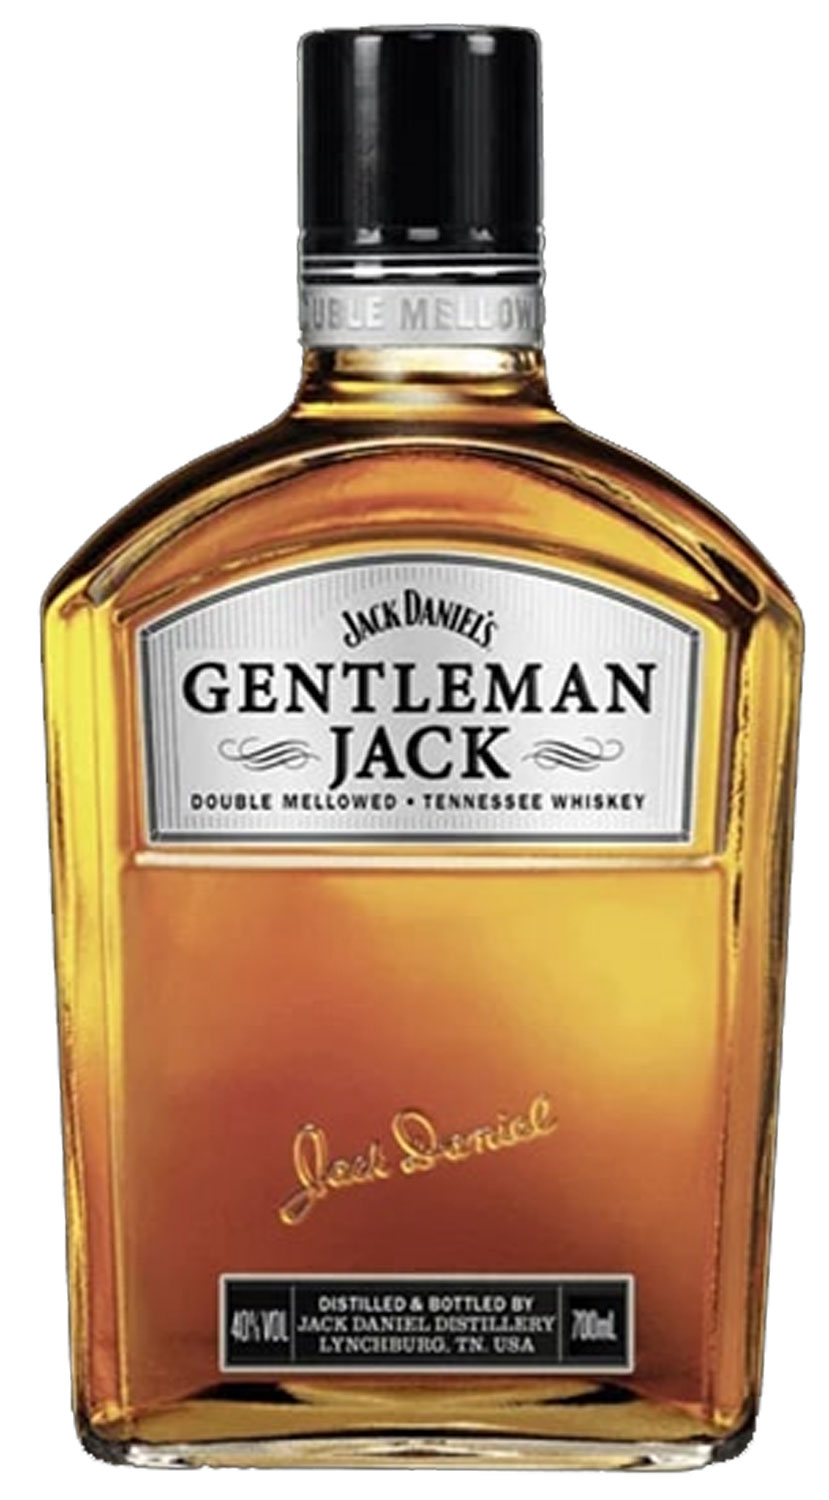  Jack Daniel's Gentleman Jack Whiskey